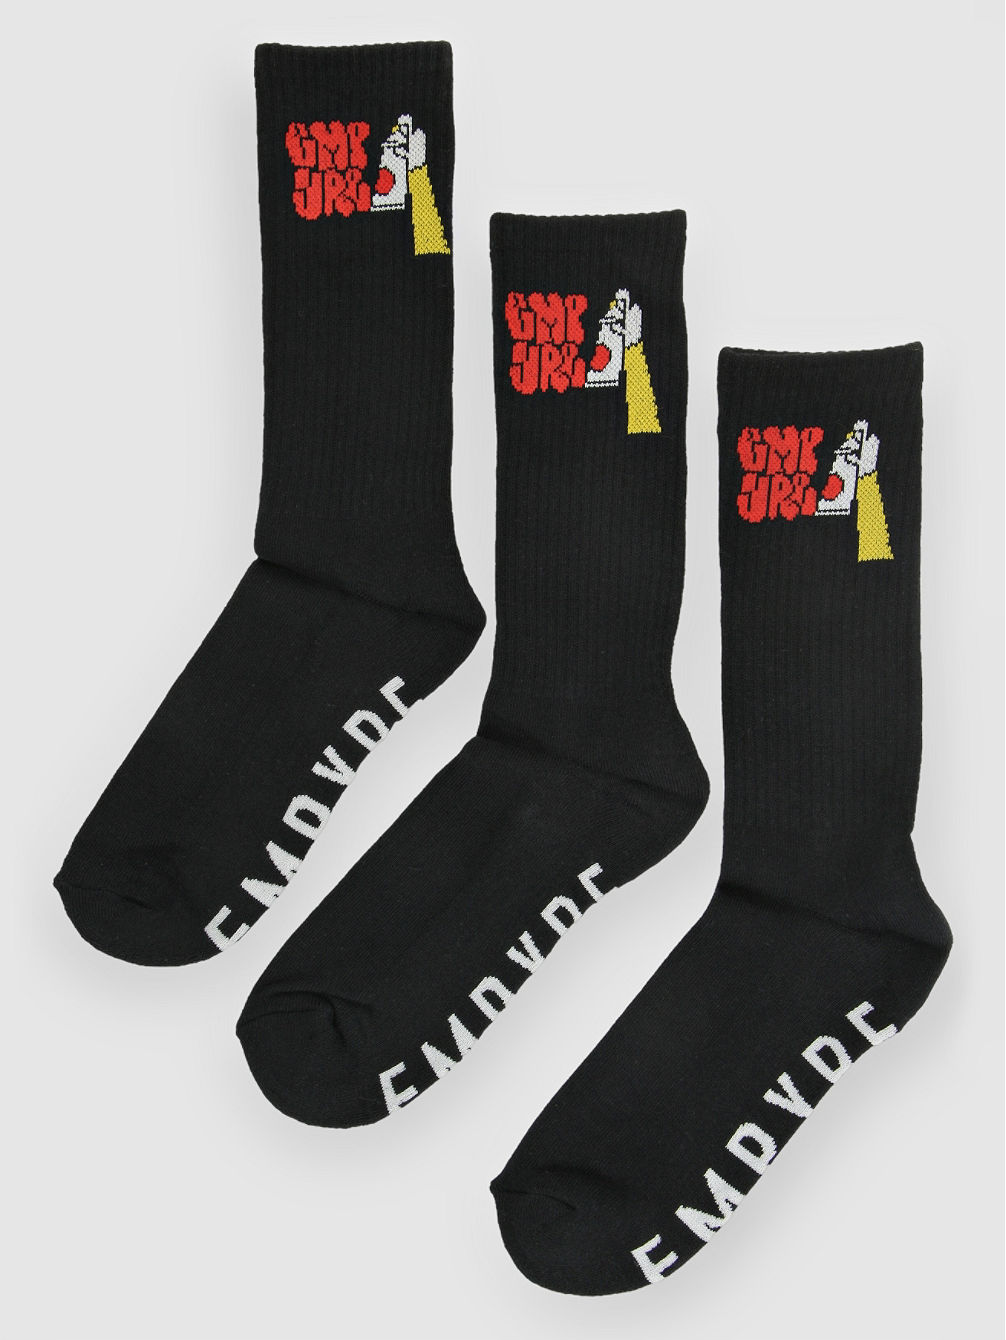 Skate Socks